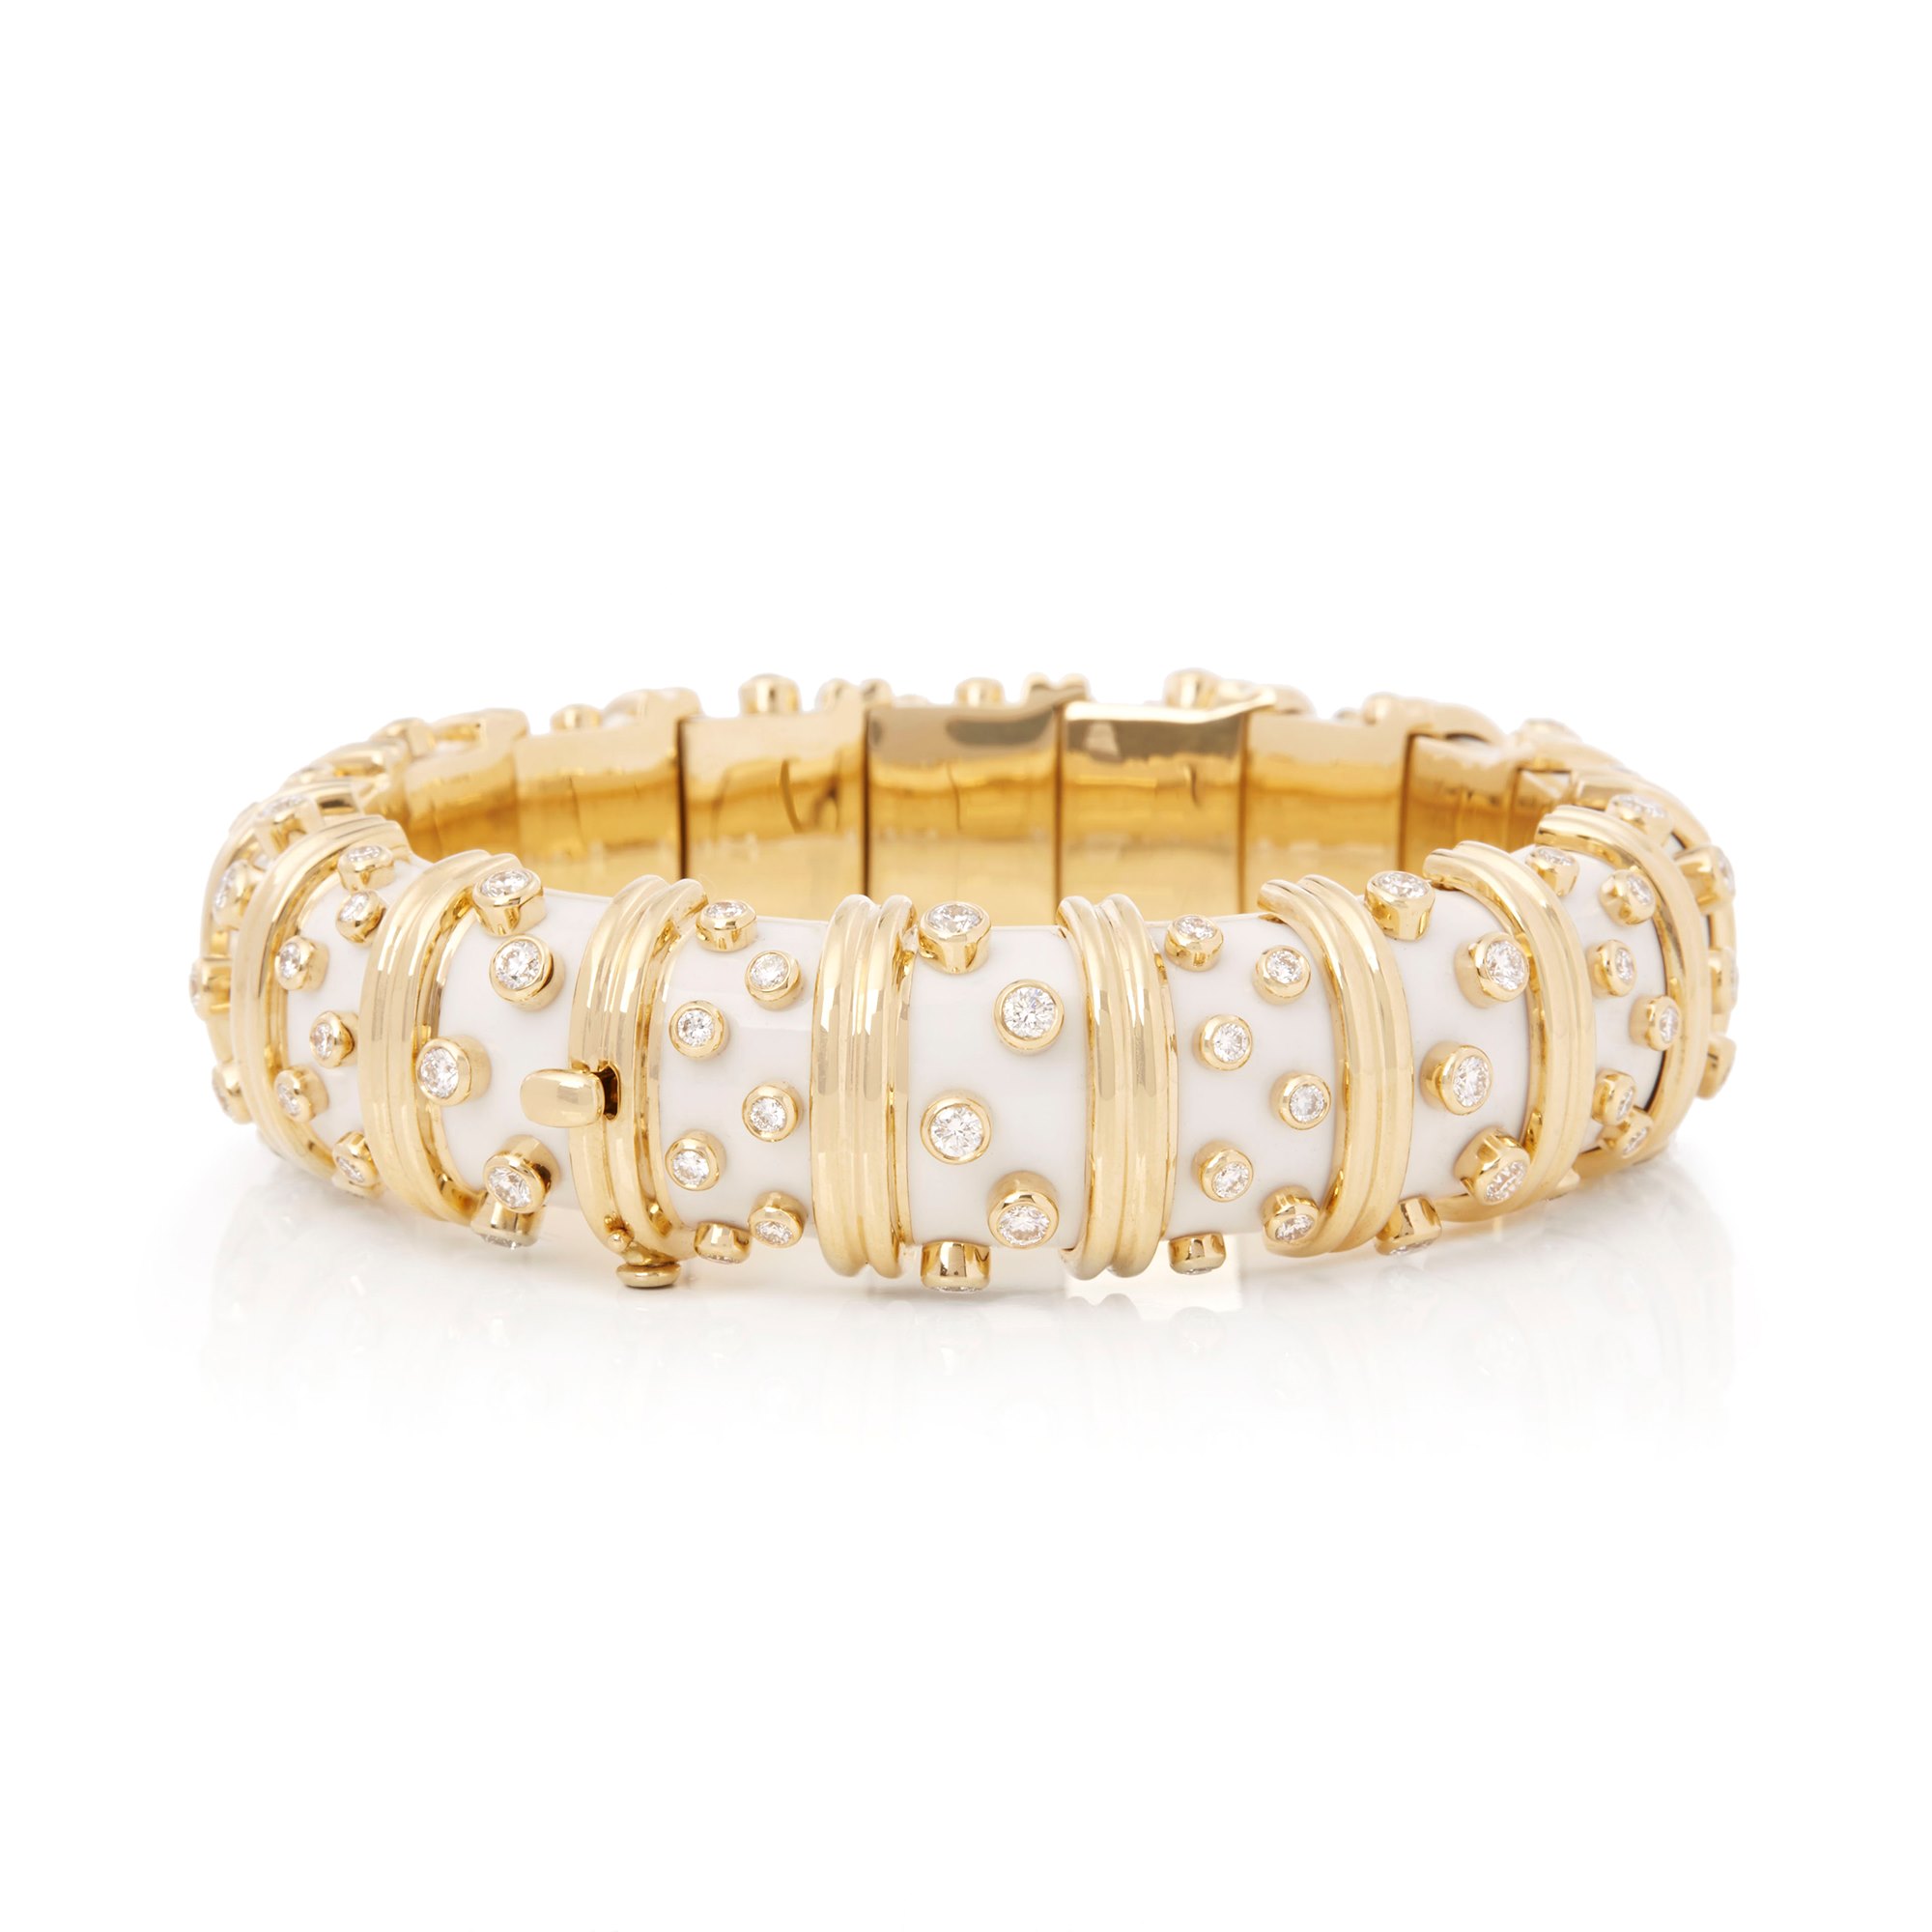 Tiffany & Co. 18k Yellow Gold White Enamel Schlumberger Bracelet